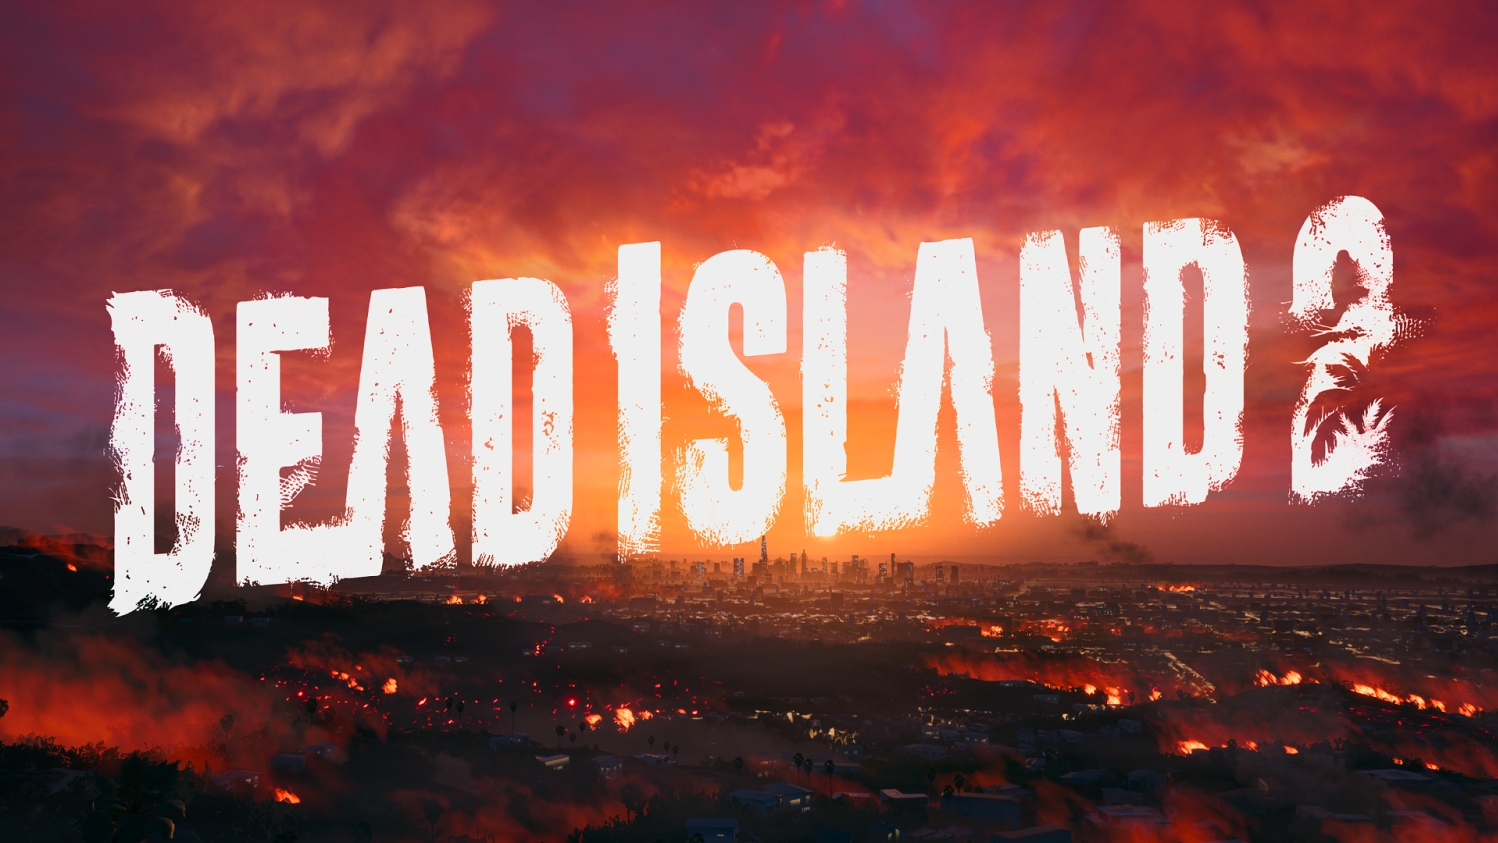 Dead Island 2 Global Sales Surpass One Million